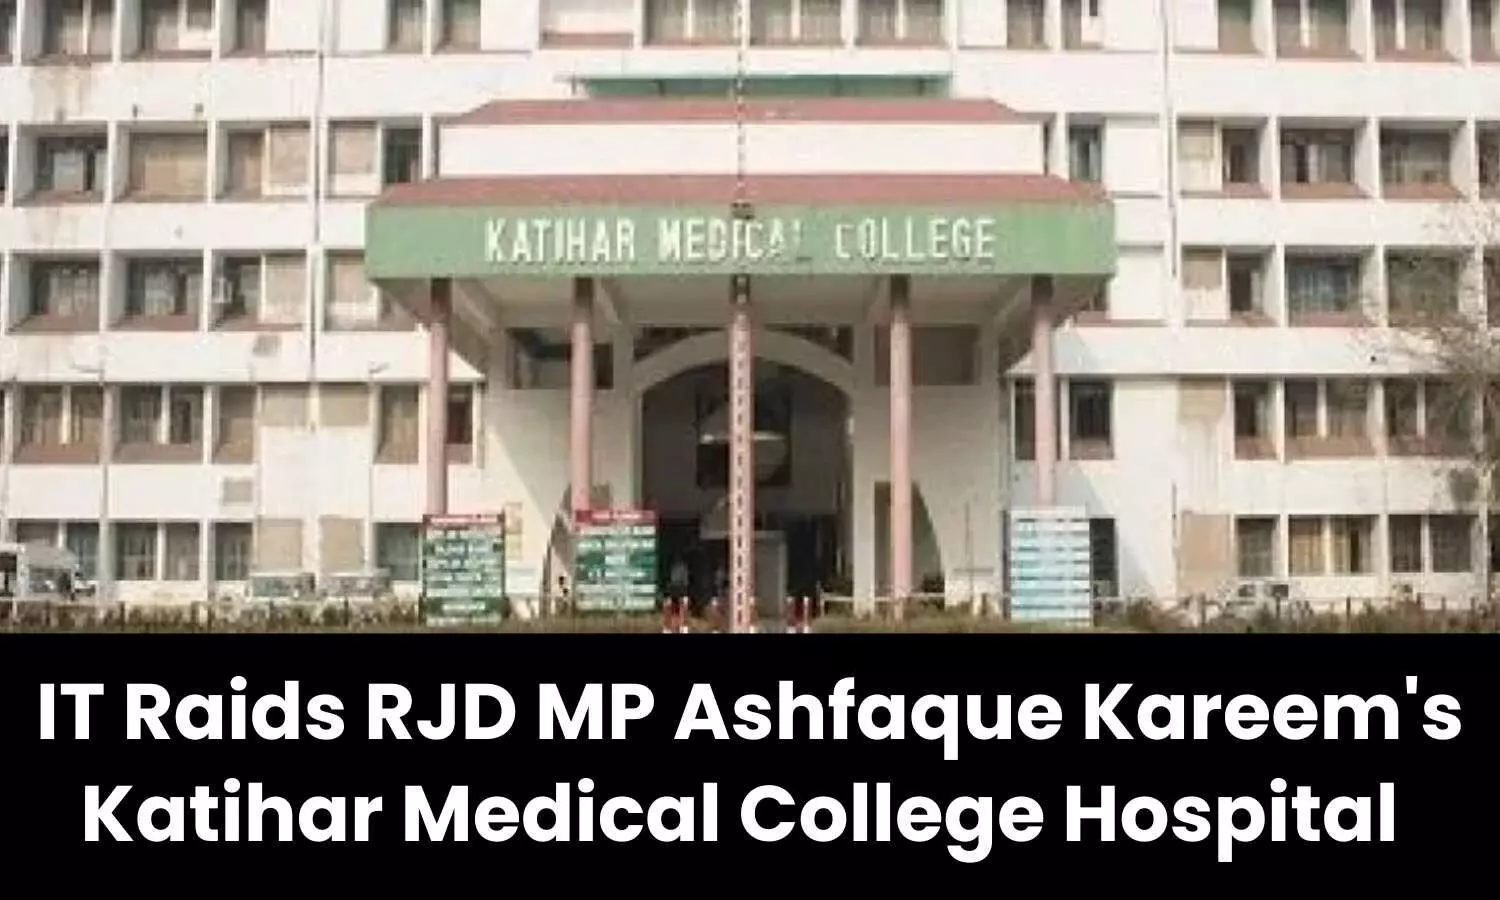 IT raids Katihar Medical College and Hospital